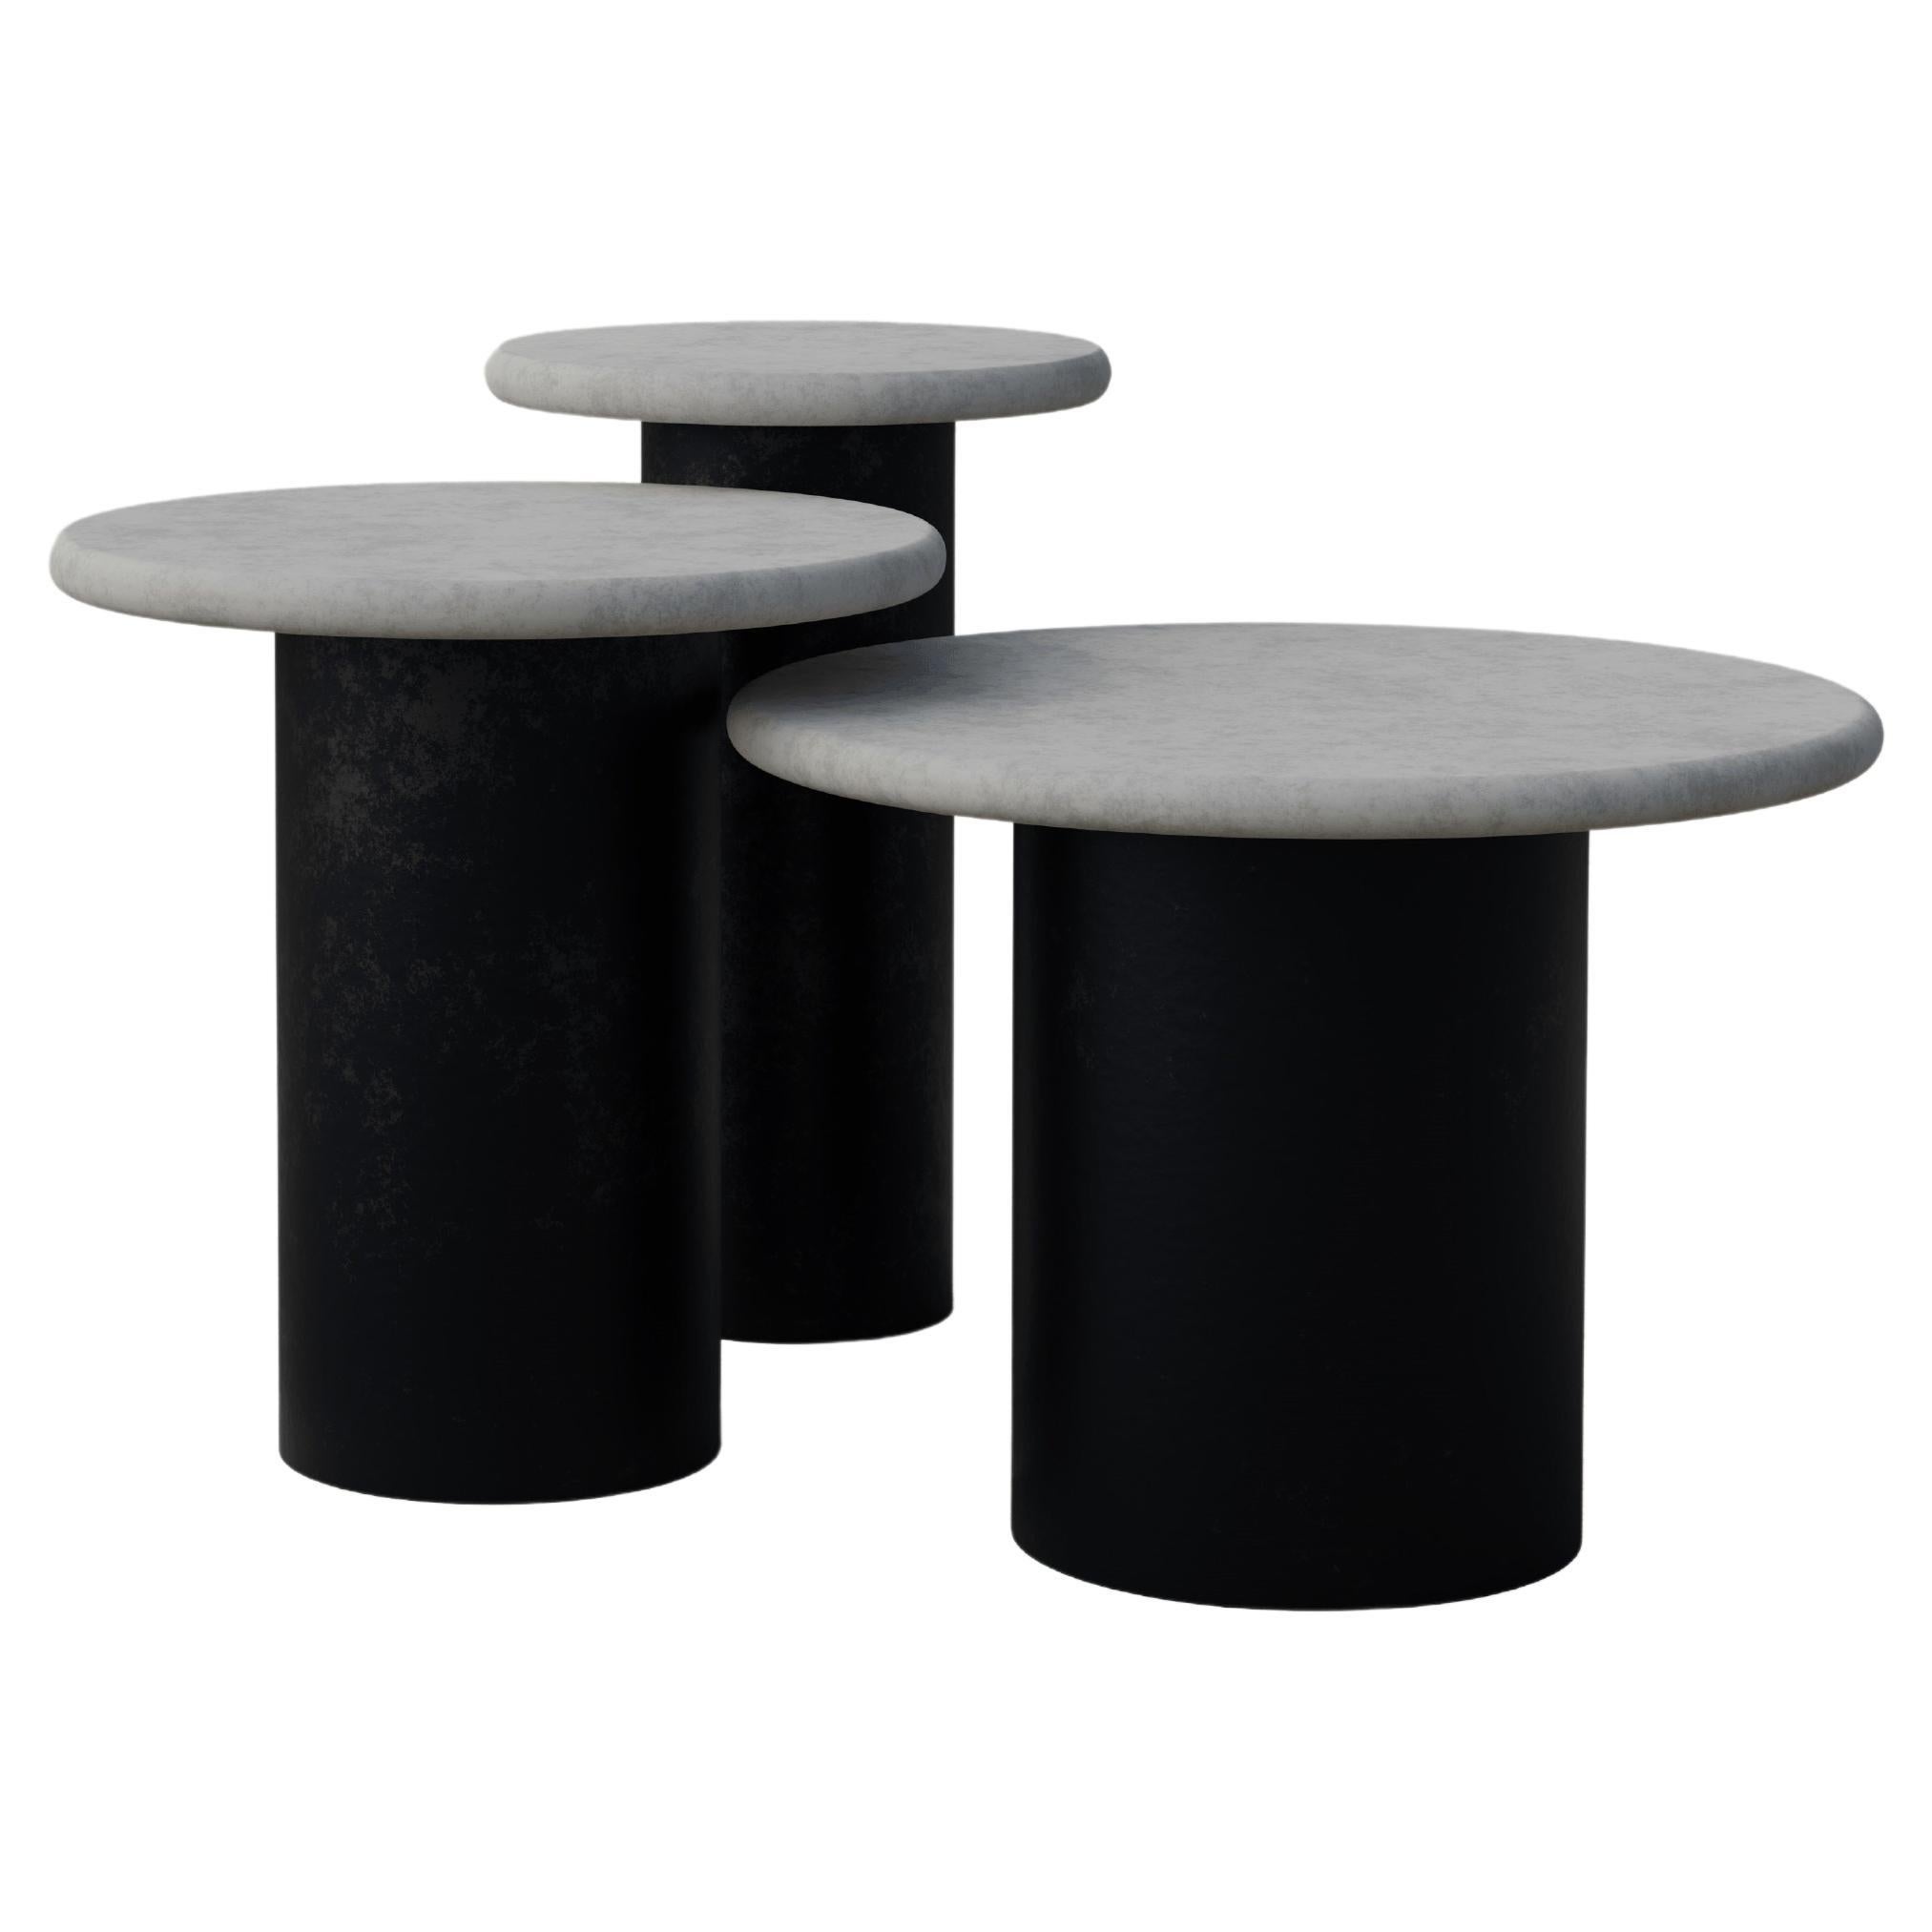 Raindrop Side Table Set, 300, 400, 500, Microcrete / Patinated